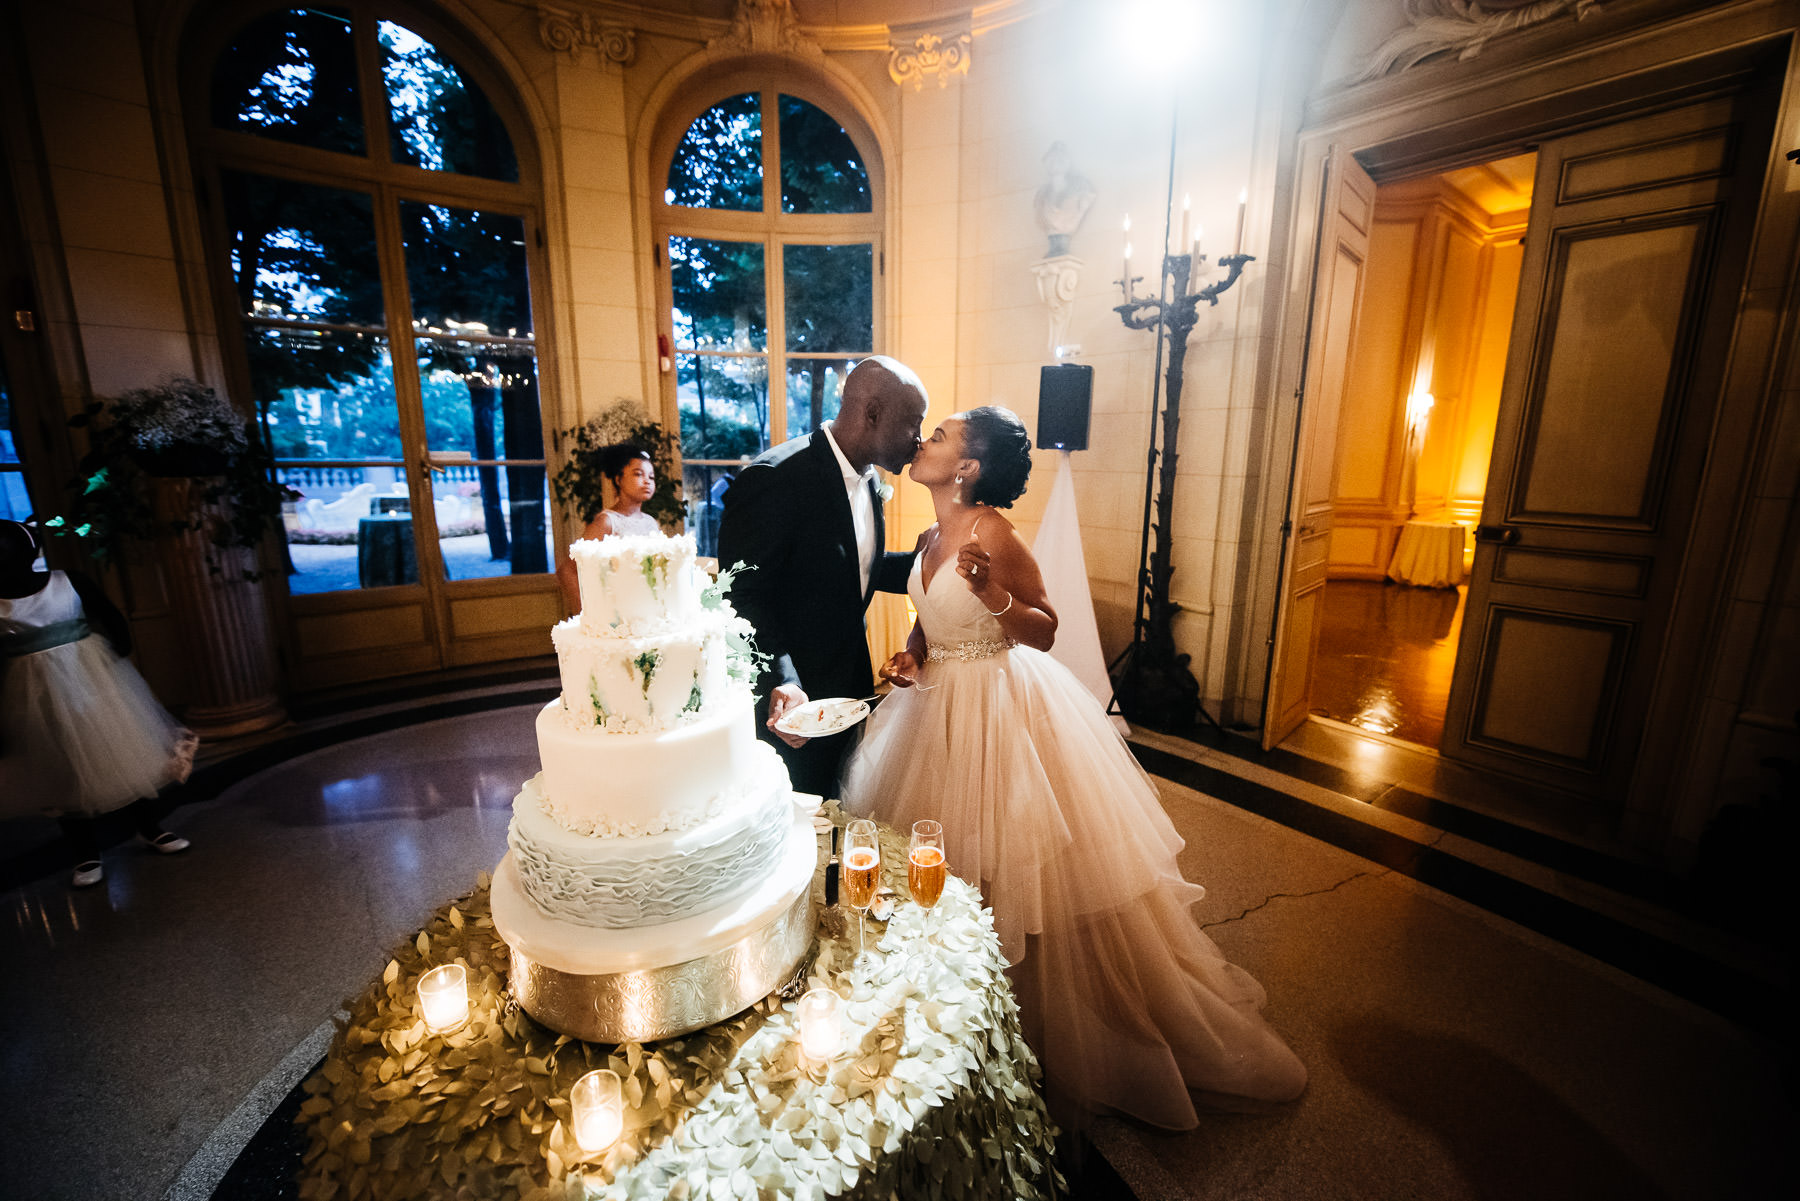 Wedding cake cutting at night Meridian House Washington, DC